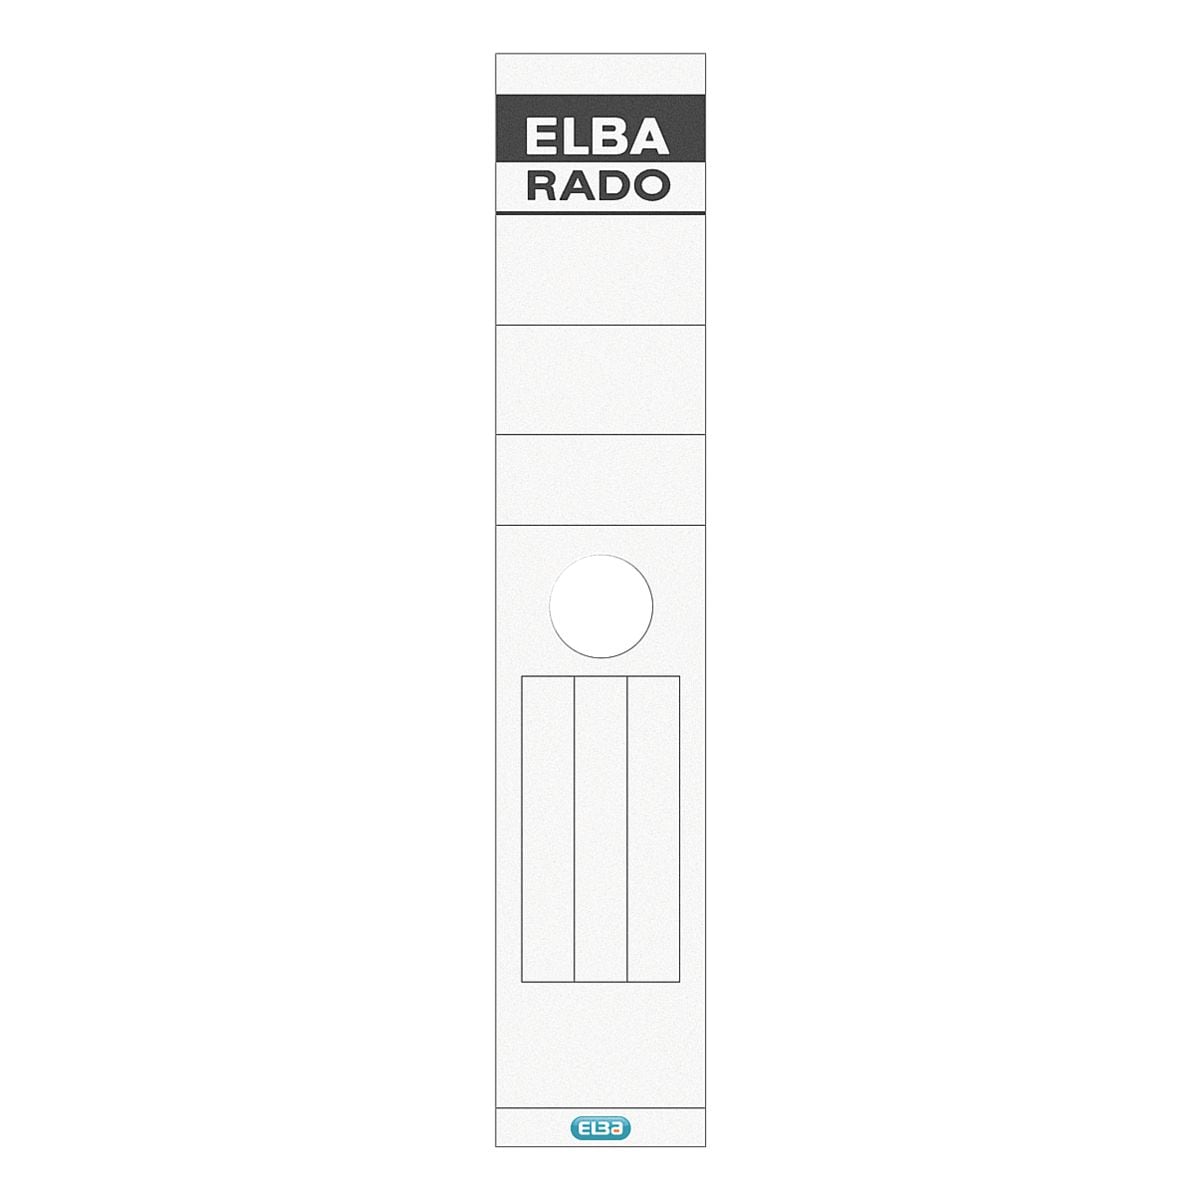 Elba tiquettes classeurs autocollantes  Rado  100420958